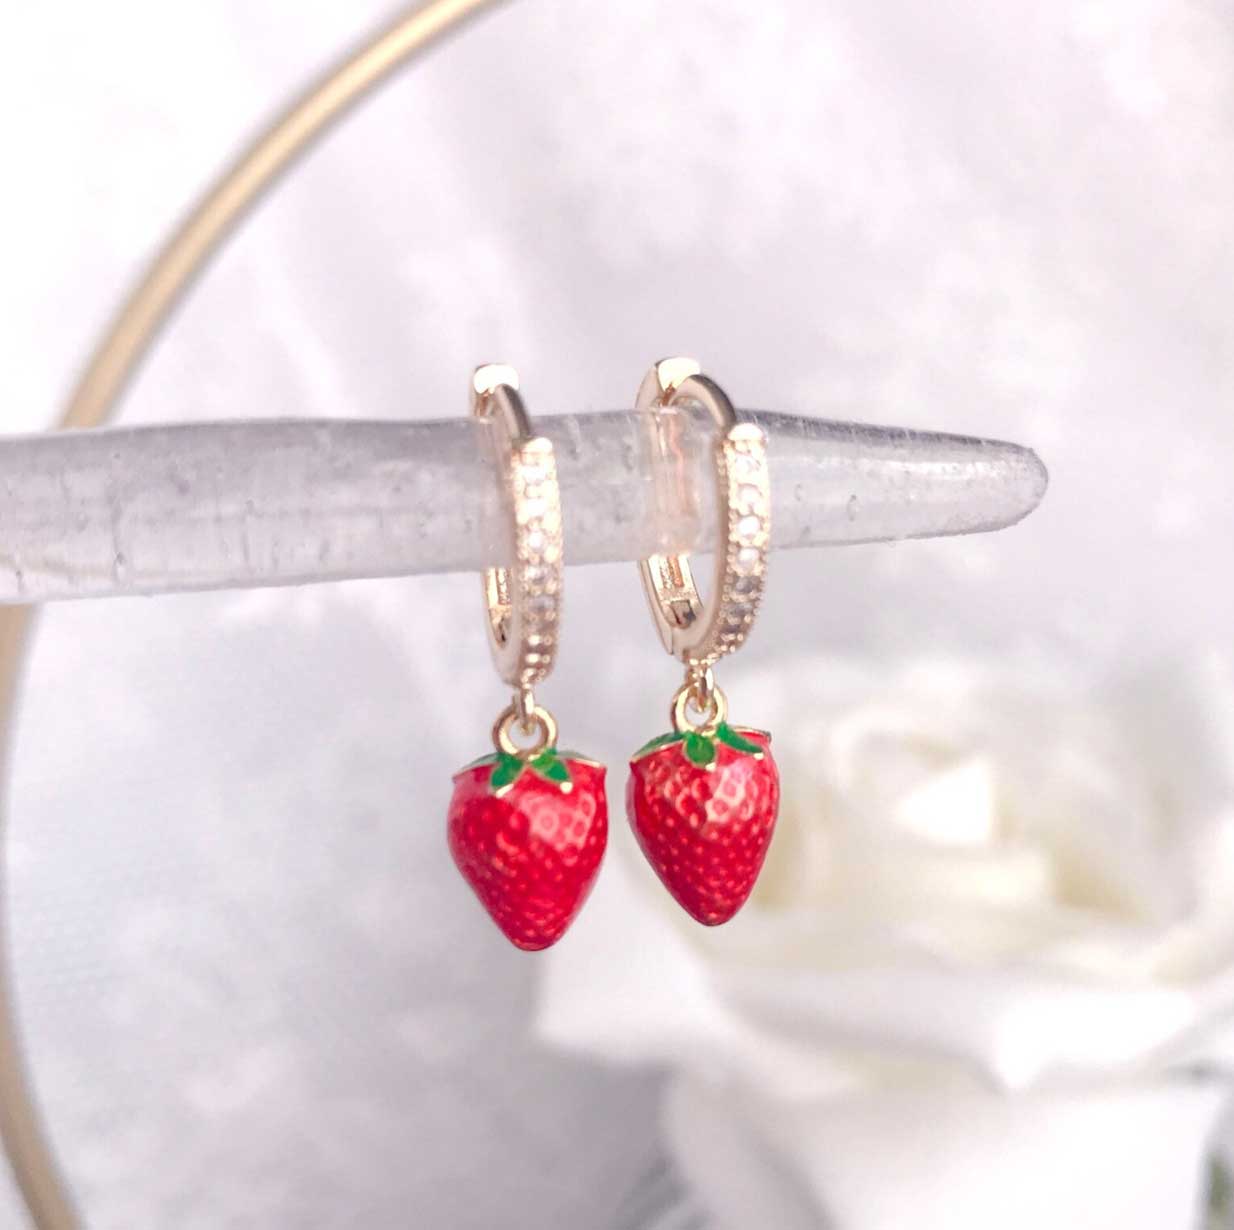 earrings aesthetic strawberry themed gift for cottagecore aesthetic lovers.